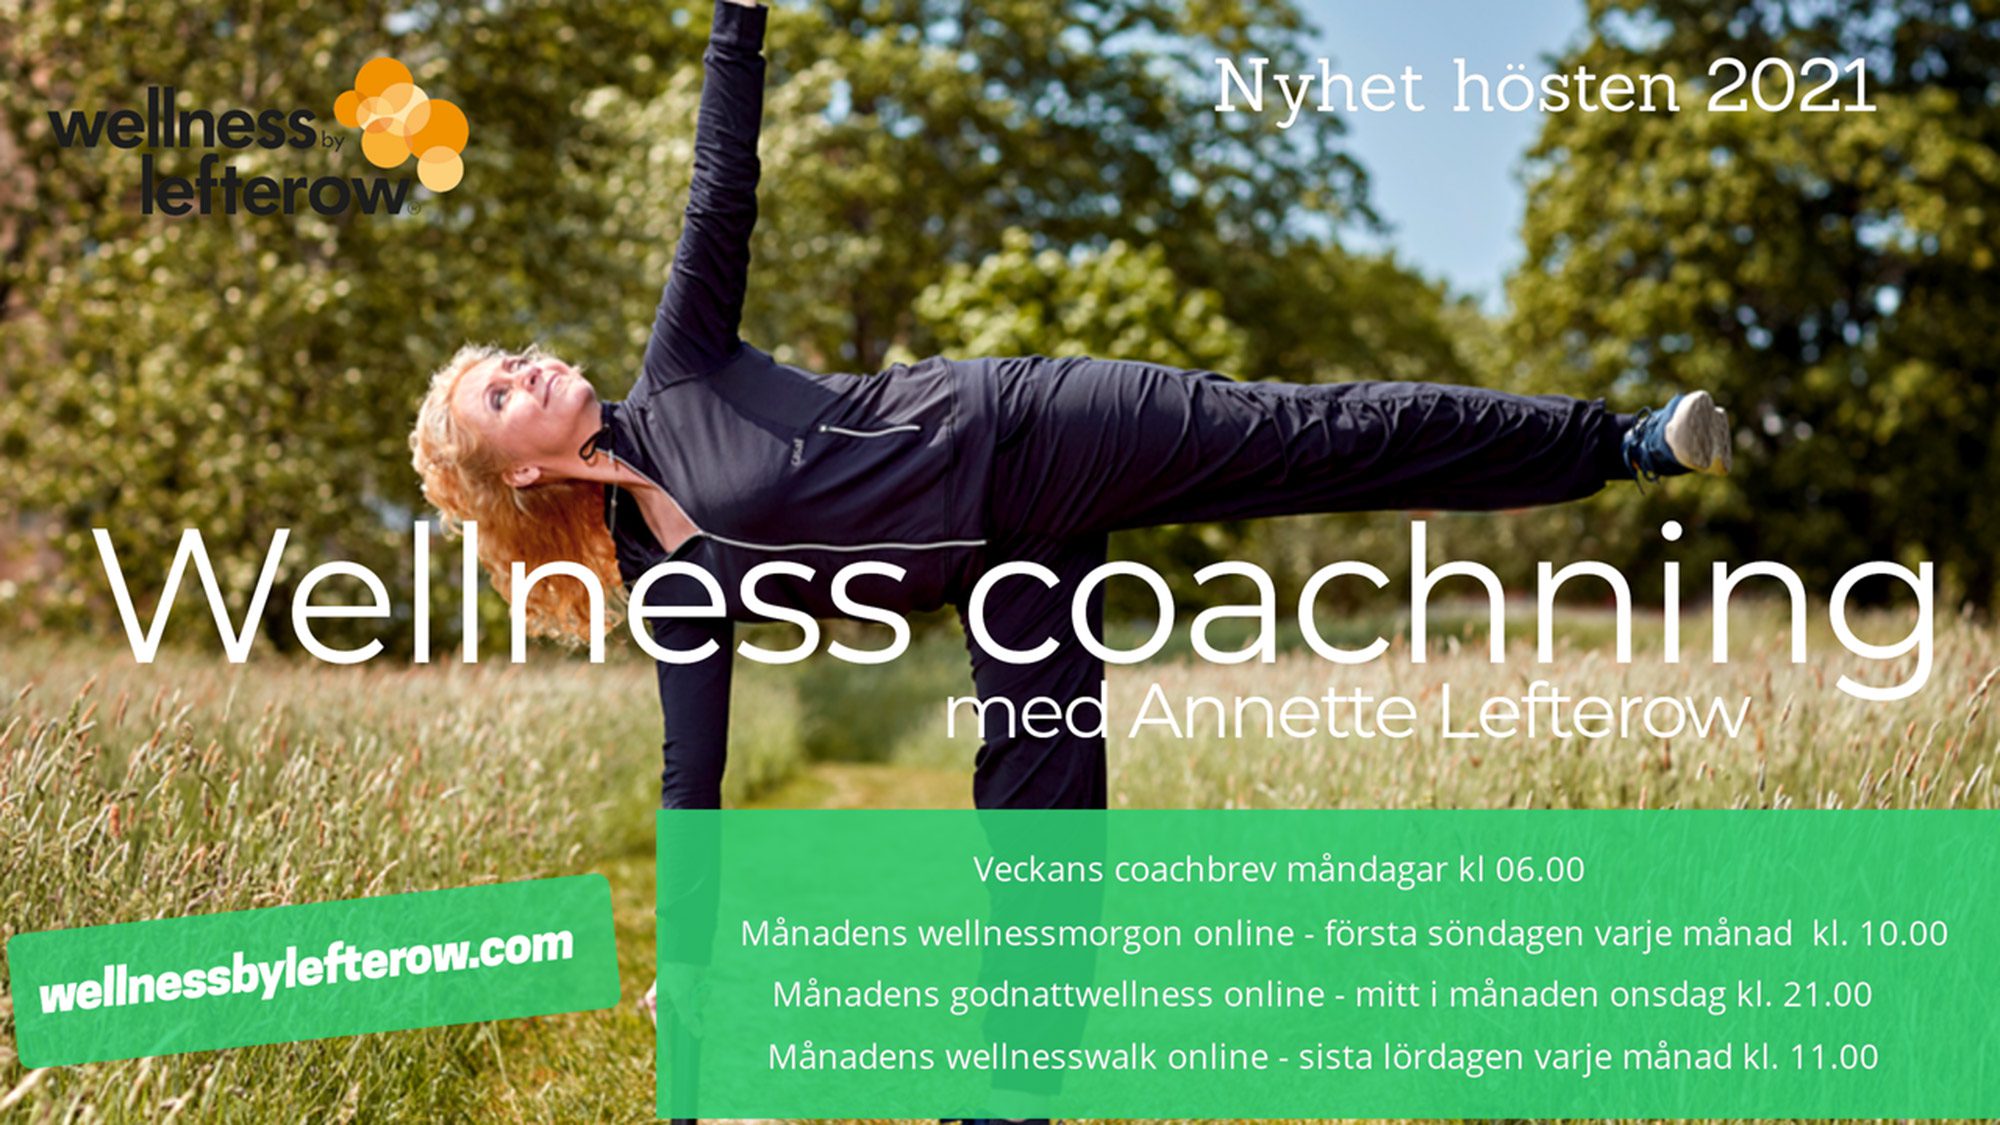 Bilden visar höstens utbud av wellness coachning med Annette Lefterow